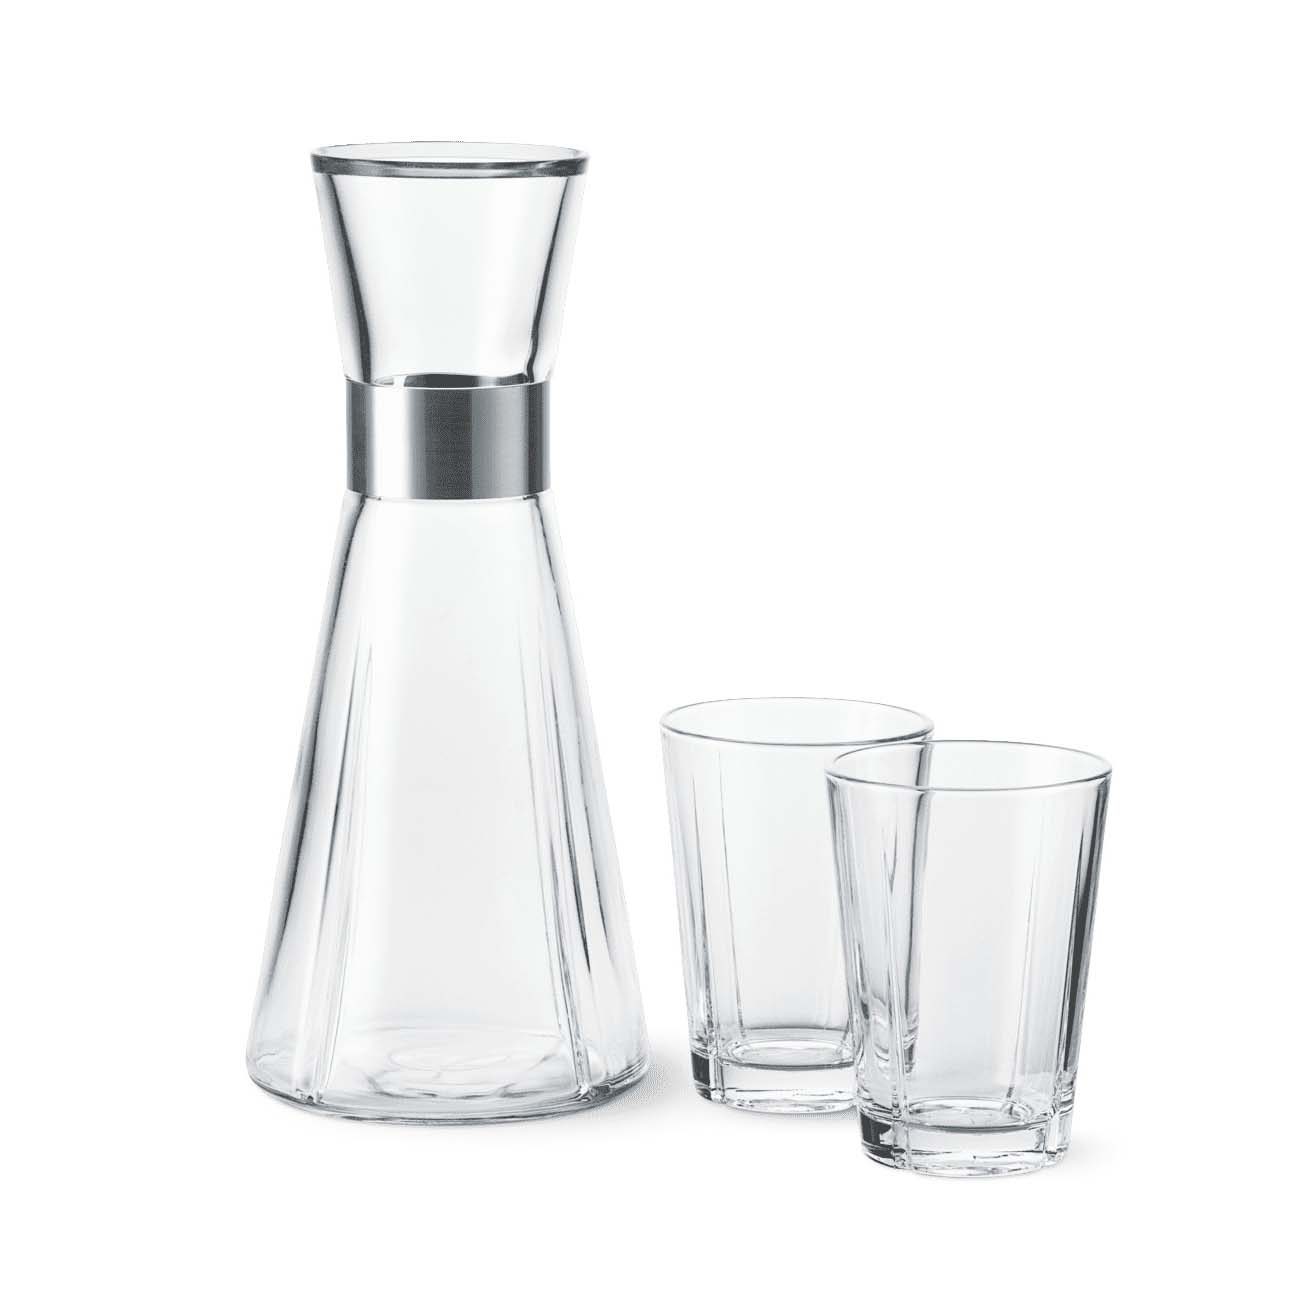 Vandkaraffel og vandglas, 2 stk